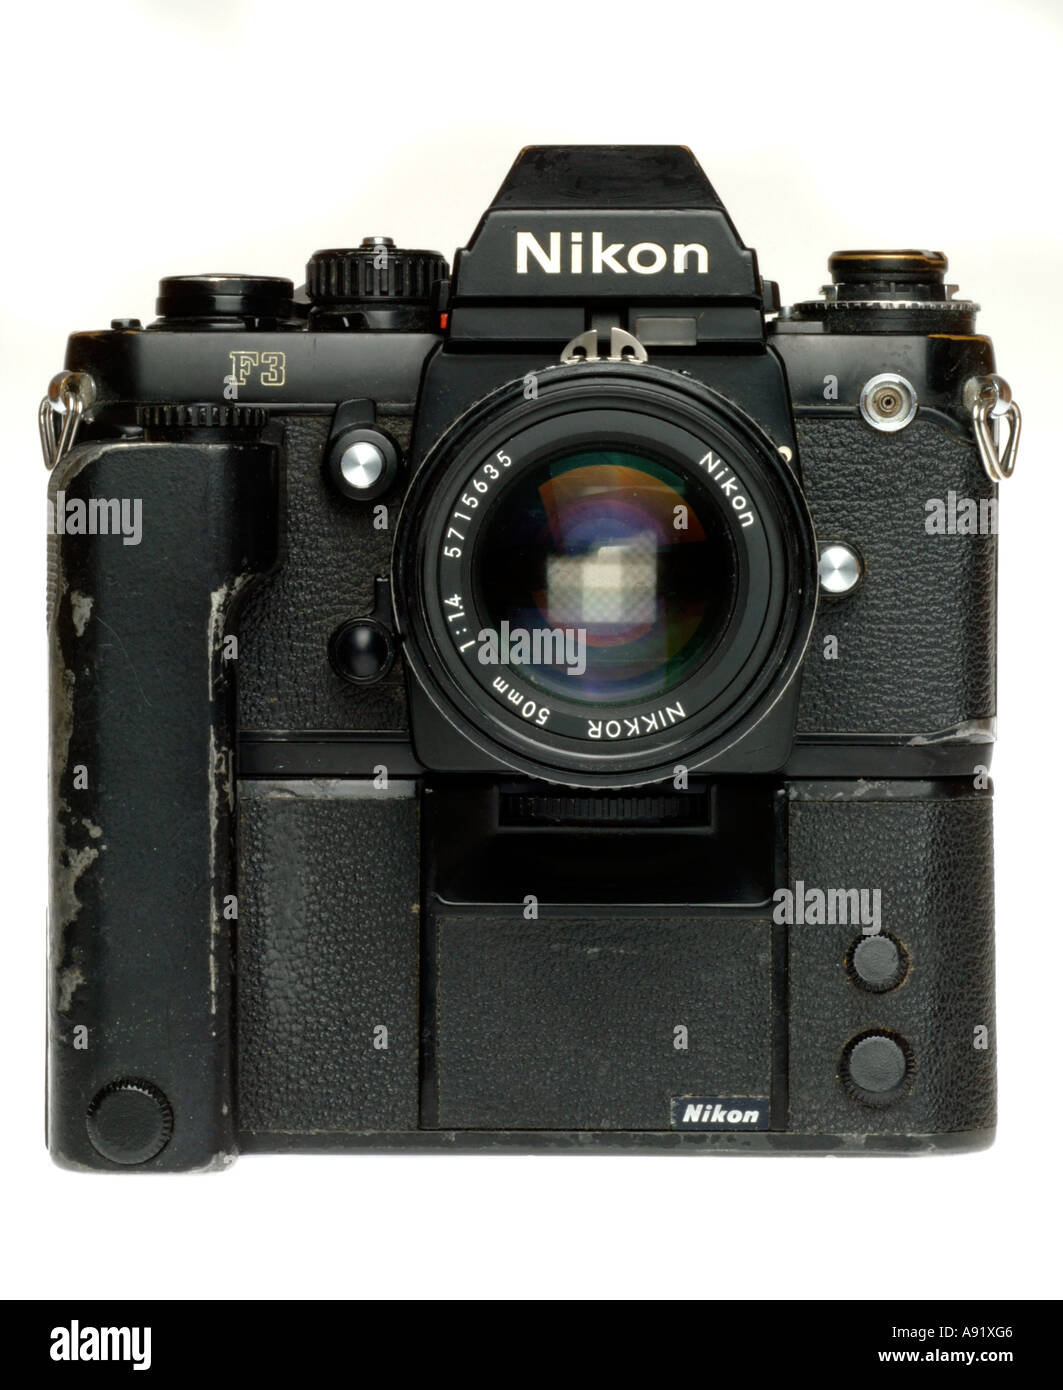 Nikon Camera, F3 with MD4 motordrive Stock Photo - Alamy